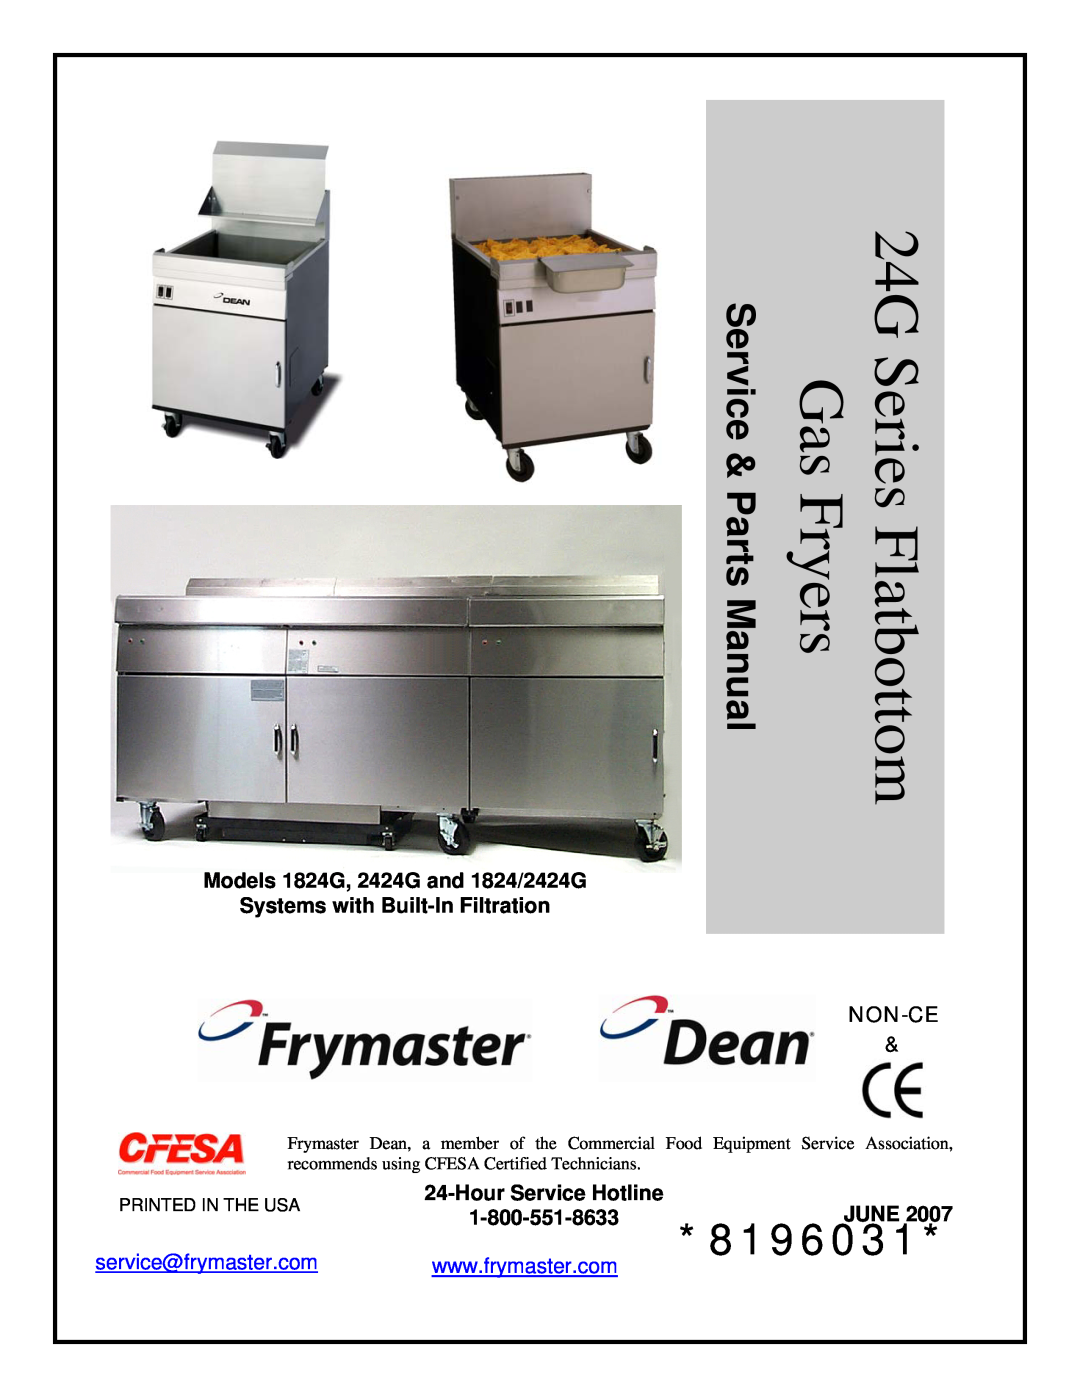 Frymaster 2424G, 1824G manual 8196031, Service & Parts Manual, 24G Series Flatbottom Gas Fryers, service@frymaster.com 